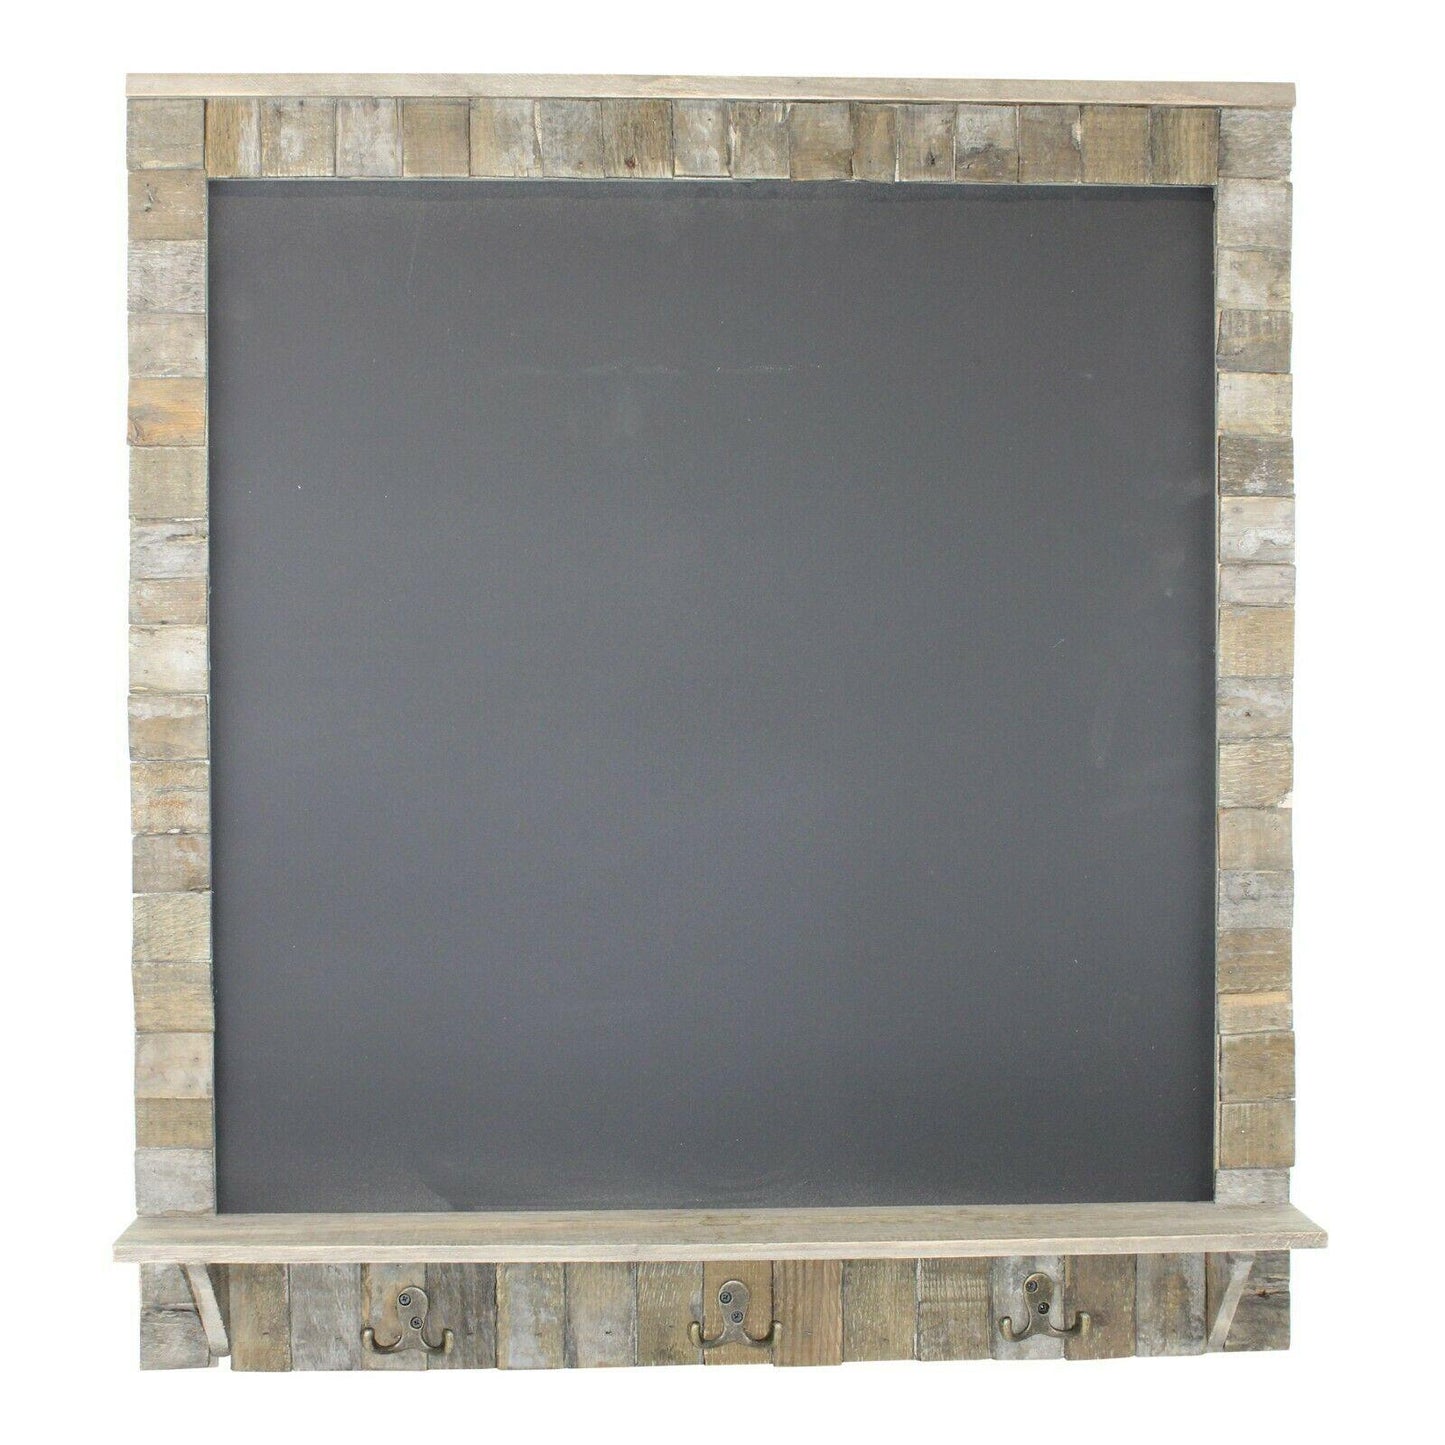 Large Blackboard with Driftwood Effect Surround Shelf 3 Hooks Memo Chalkboard - Home Inspired Gifts